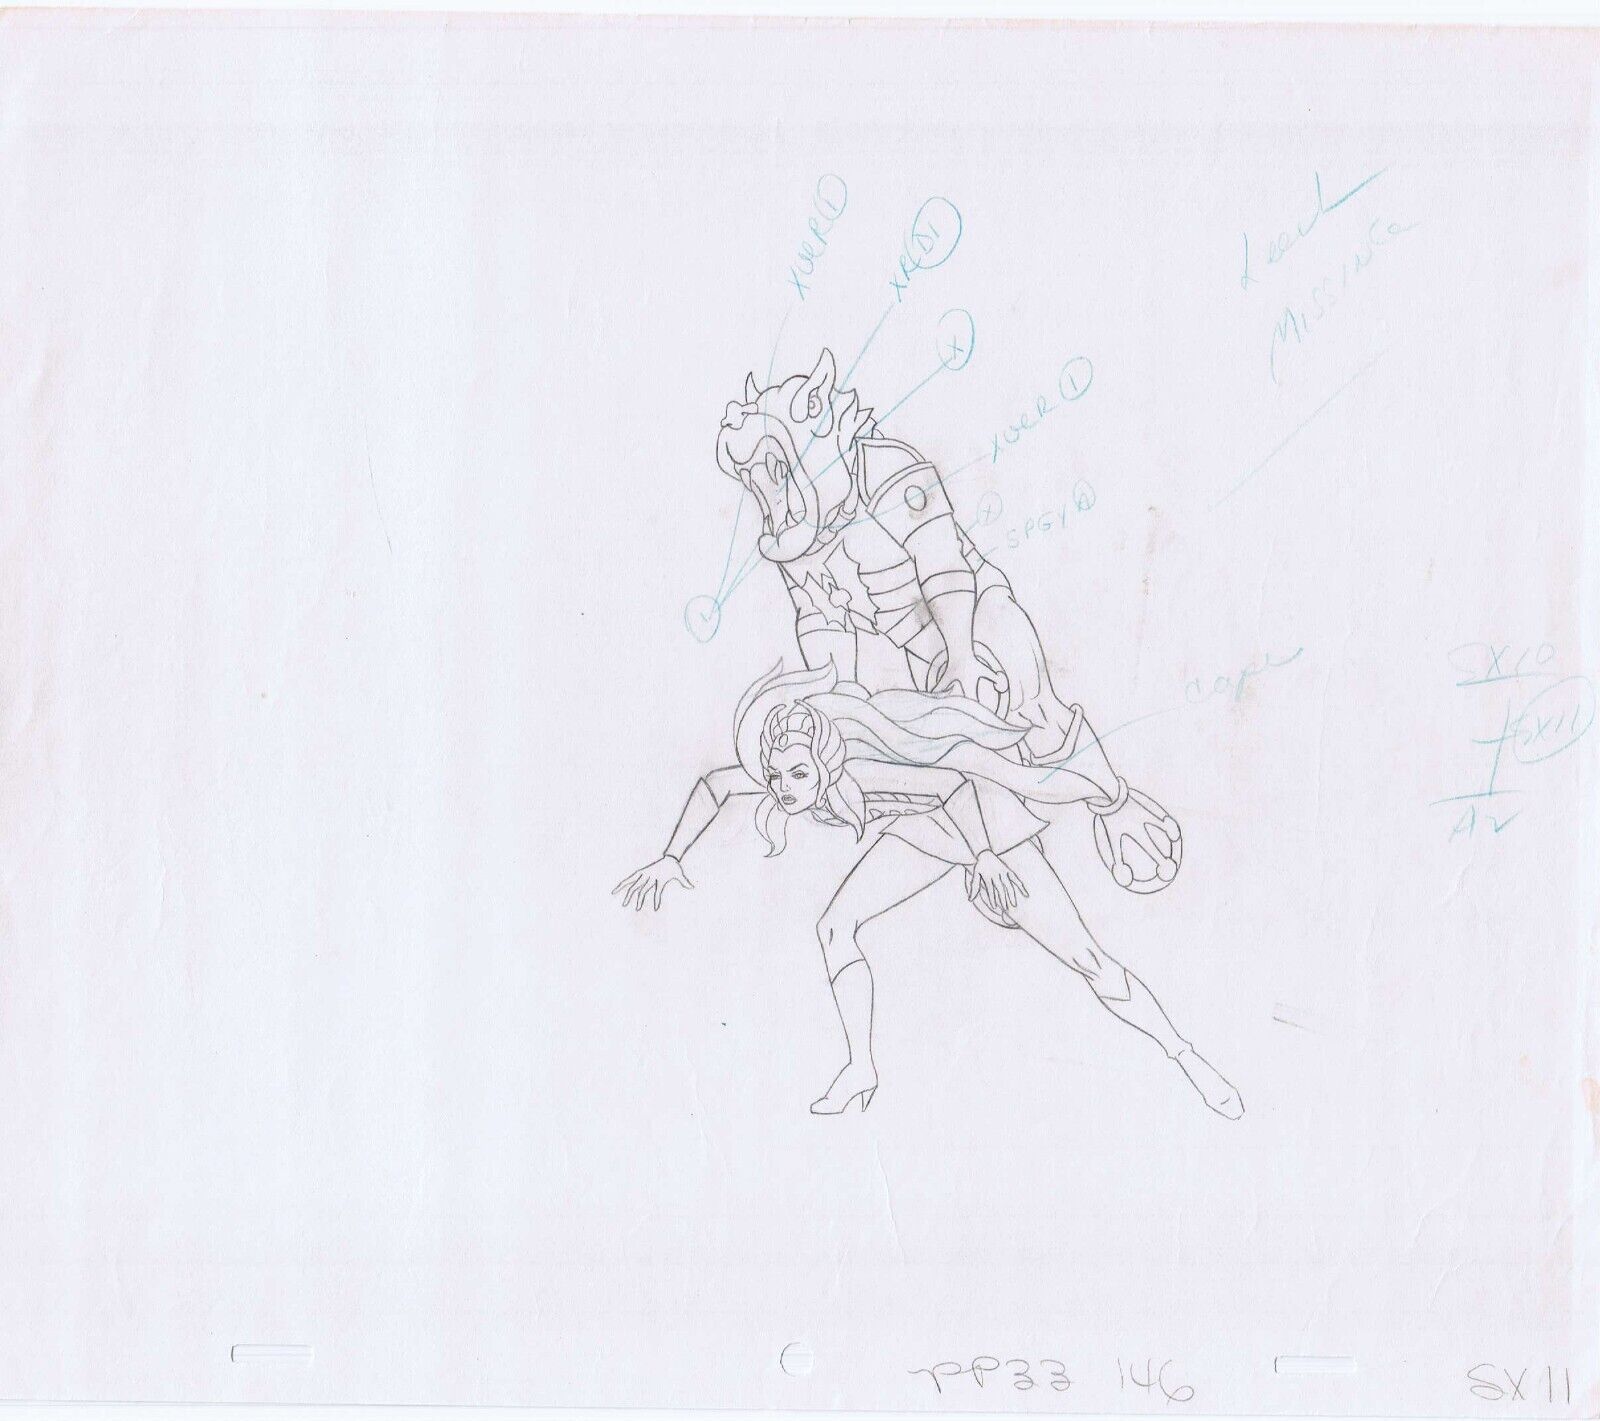 She-Ra Leech 1985 Original Art Animation Production Pencils PP 33-146 SX-11